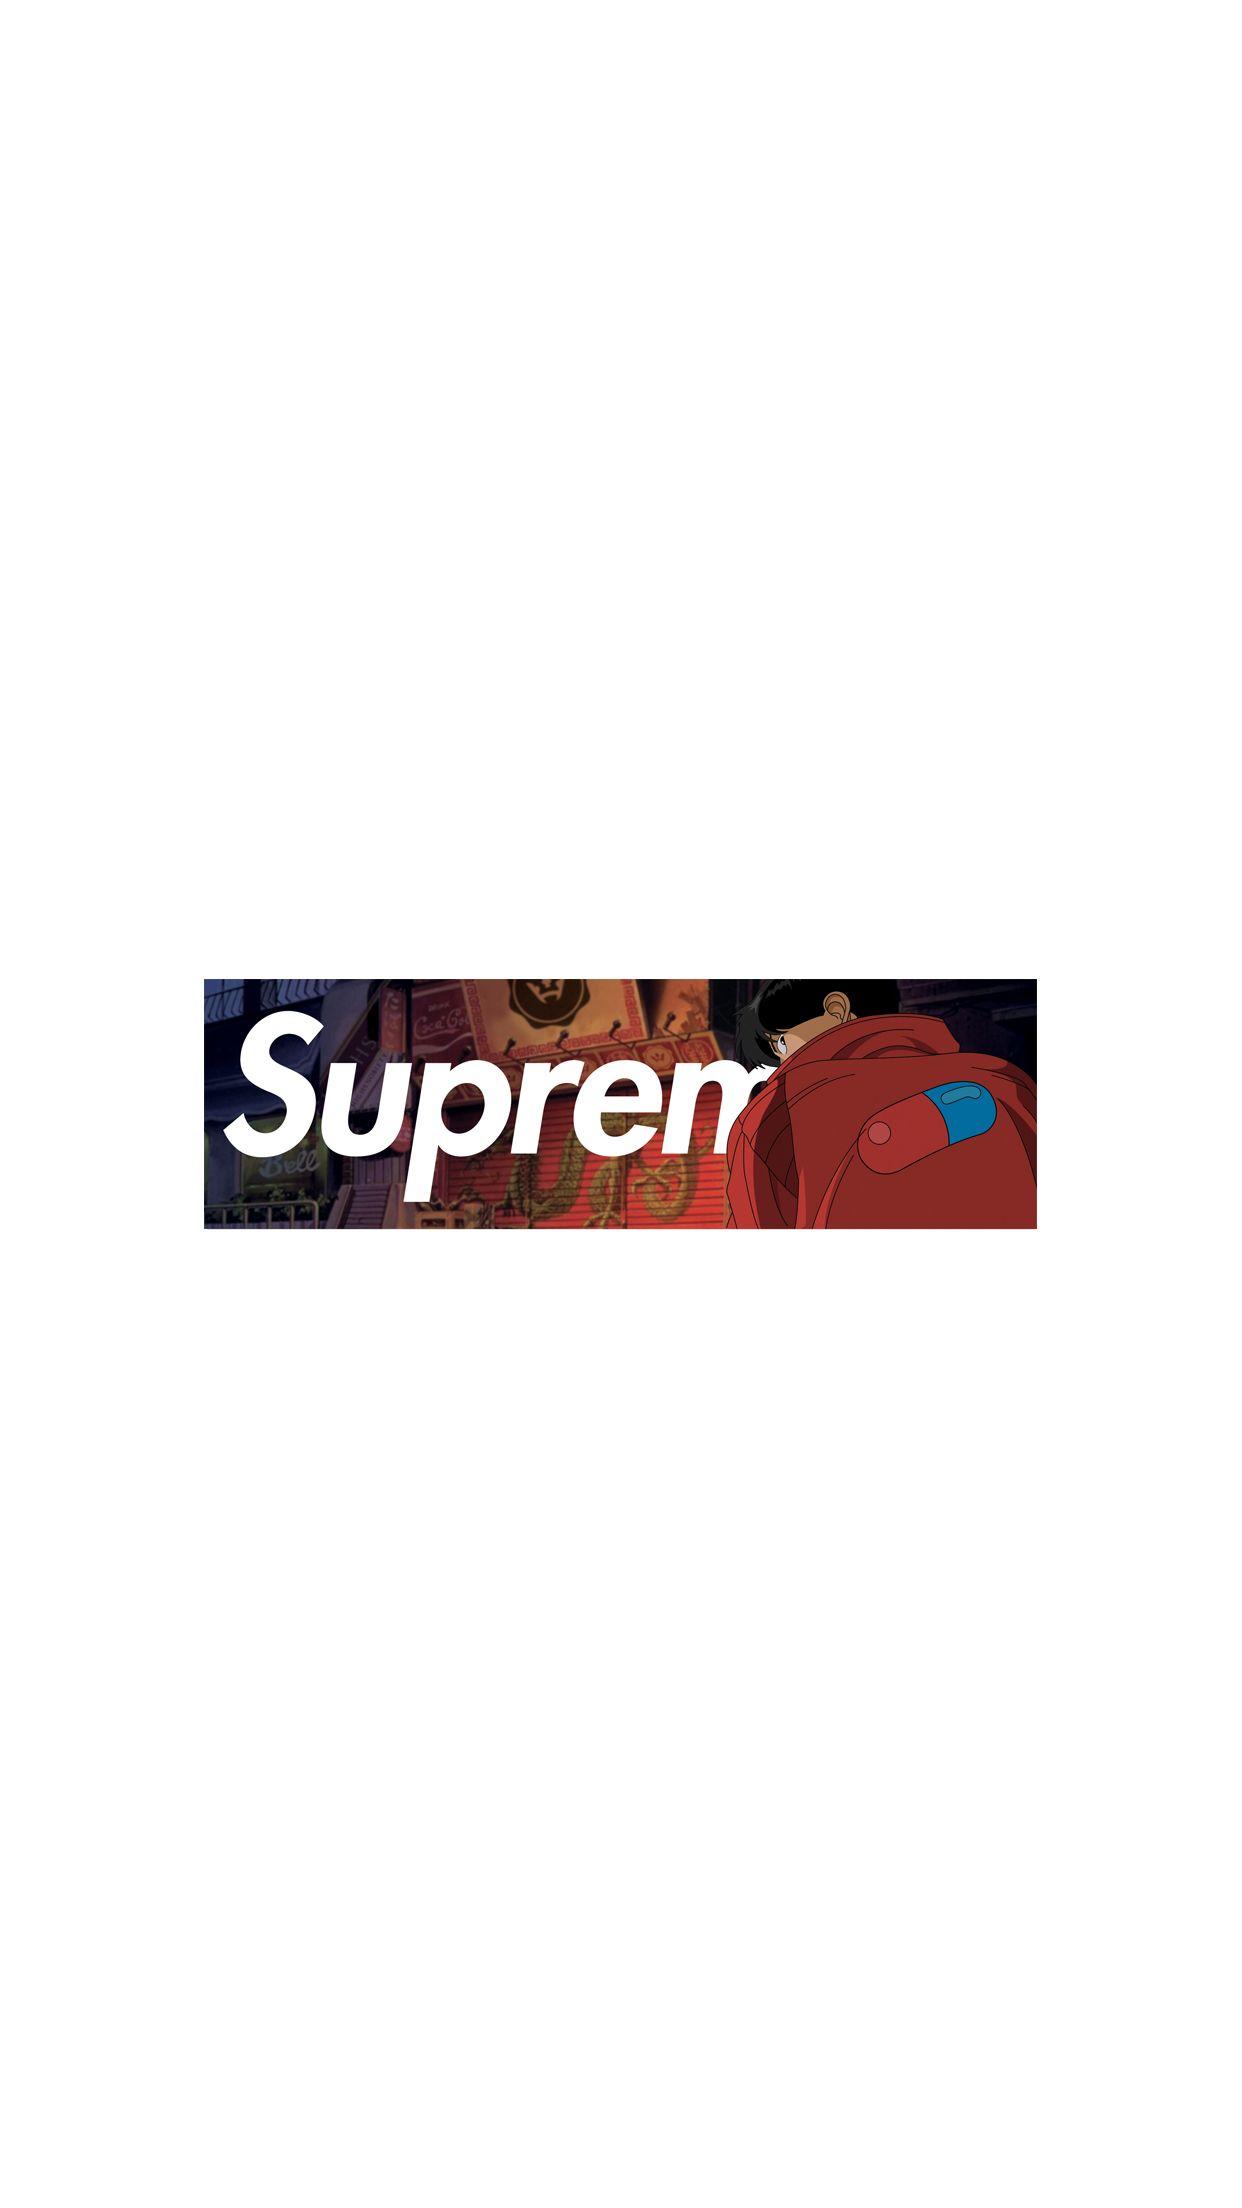 Supreme x Akira iPhone Wallpaper: Download Here